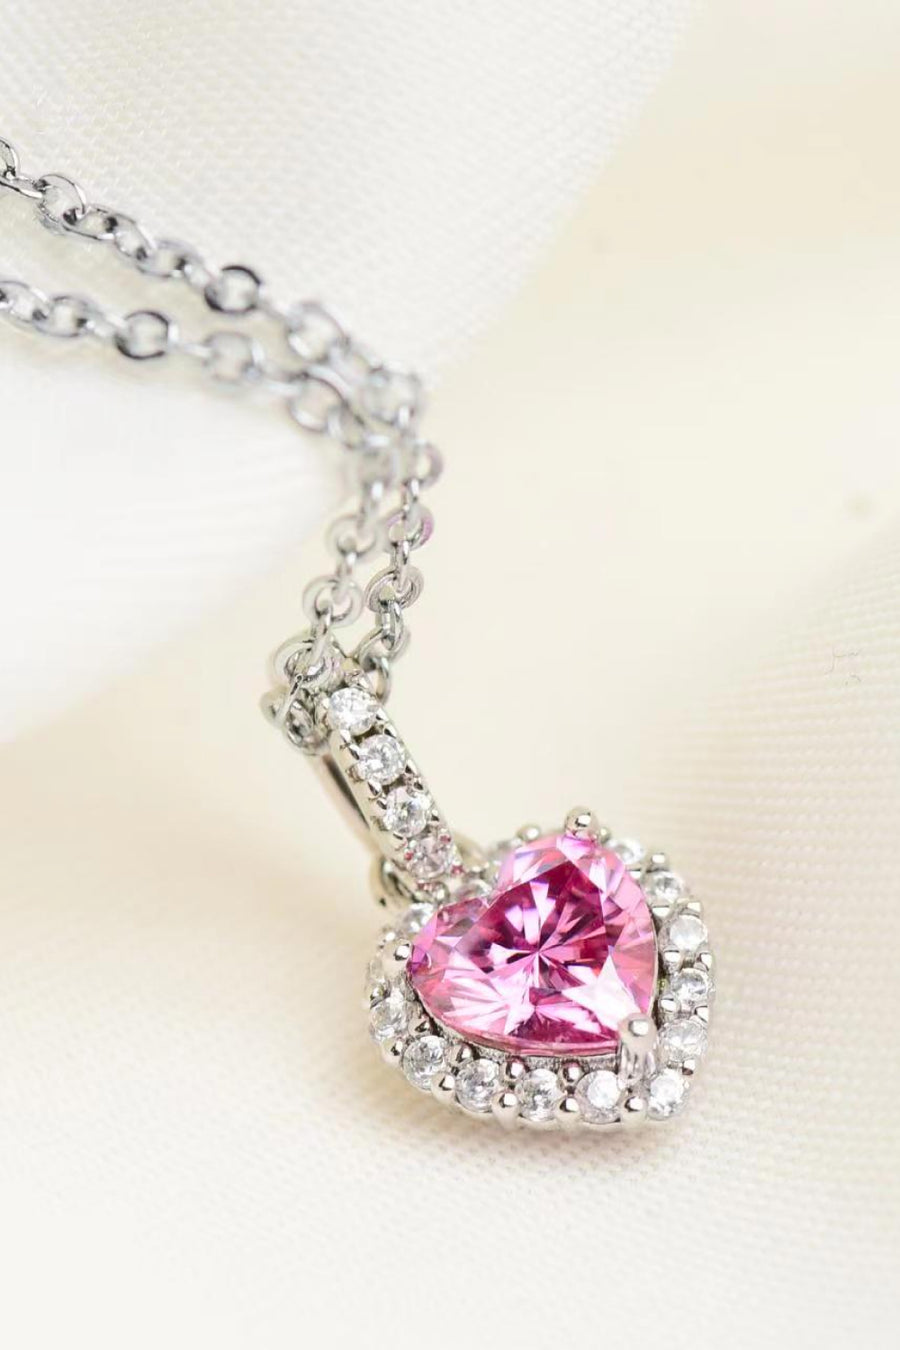 One Pretty Love 1 Carat Moissanite Heart Pendant Necklace